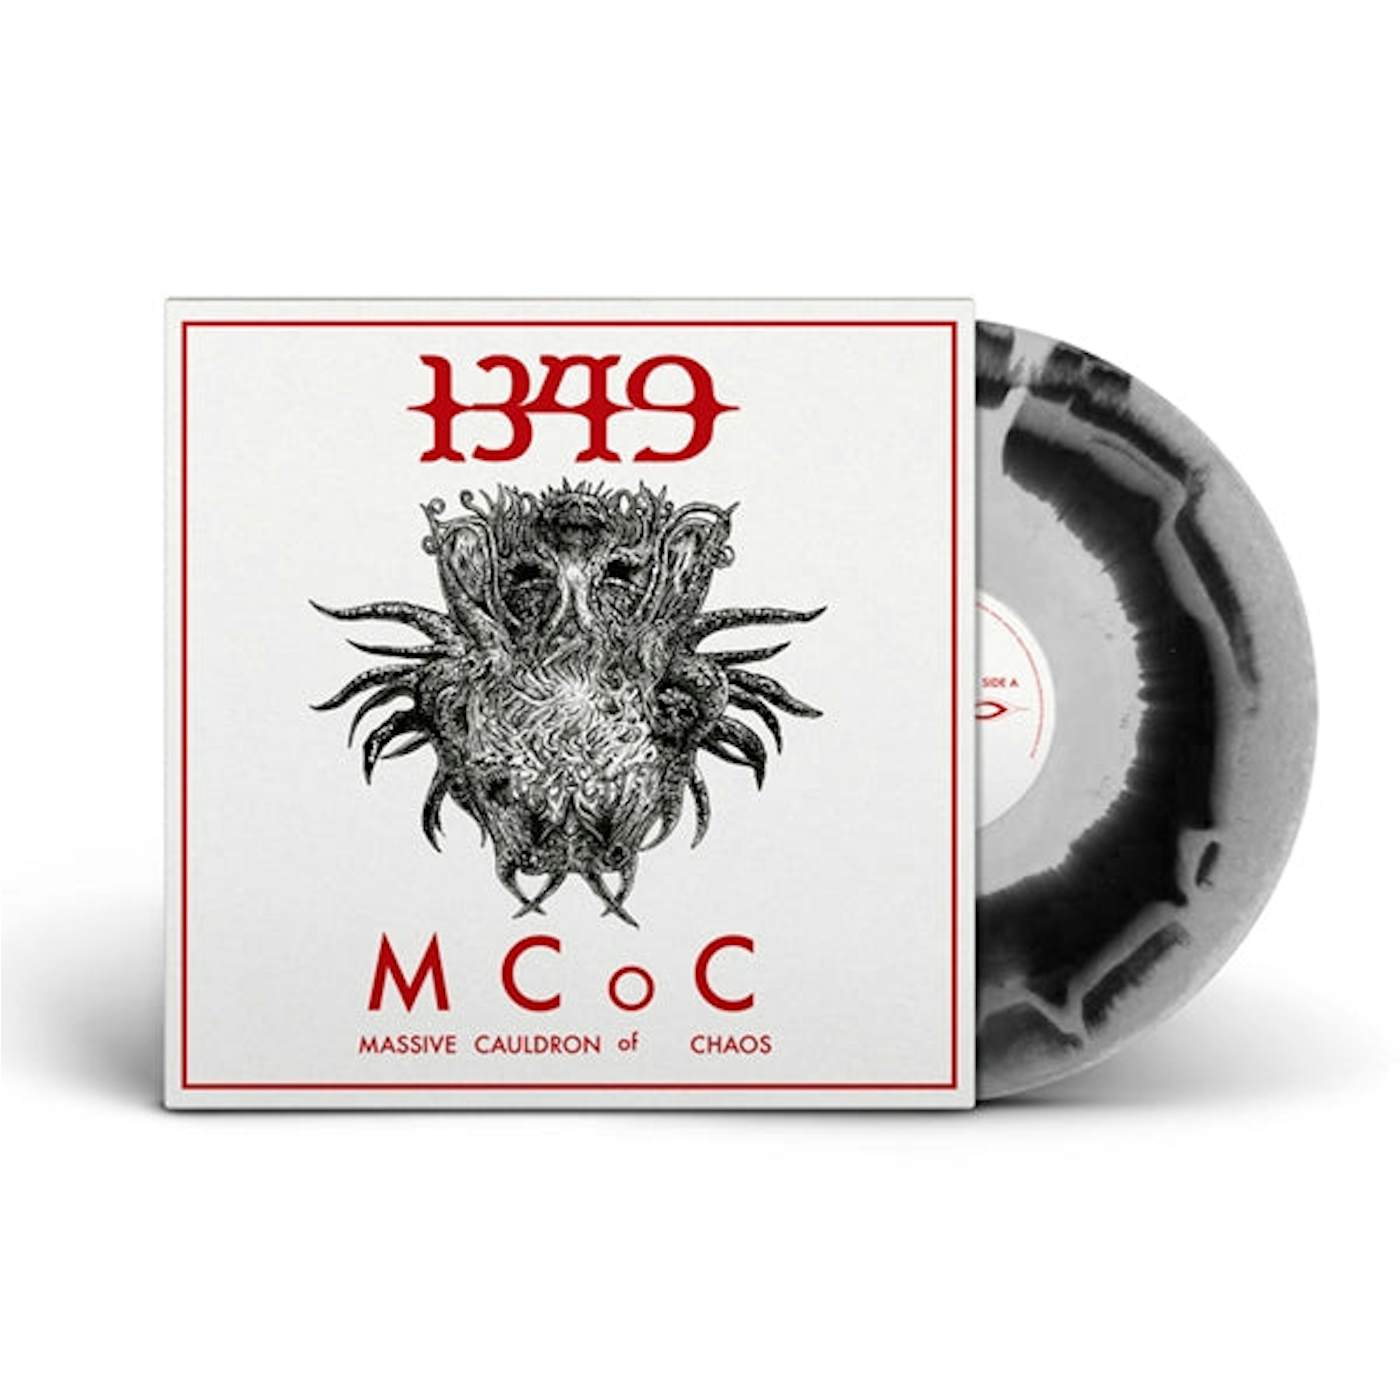 1349 LP - Massive Cauldron Of Chaos (Special Edition Black/White Vinyl)